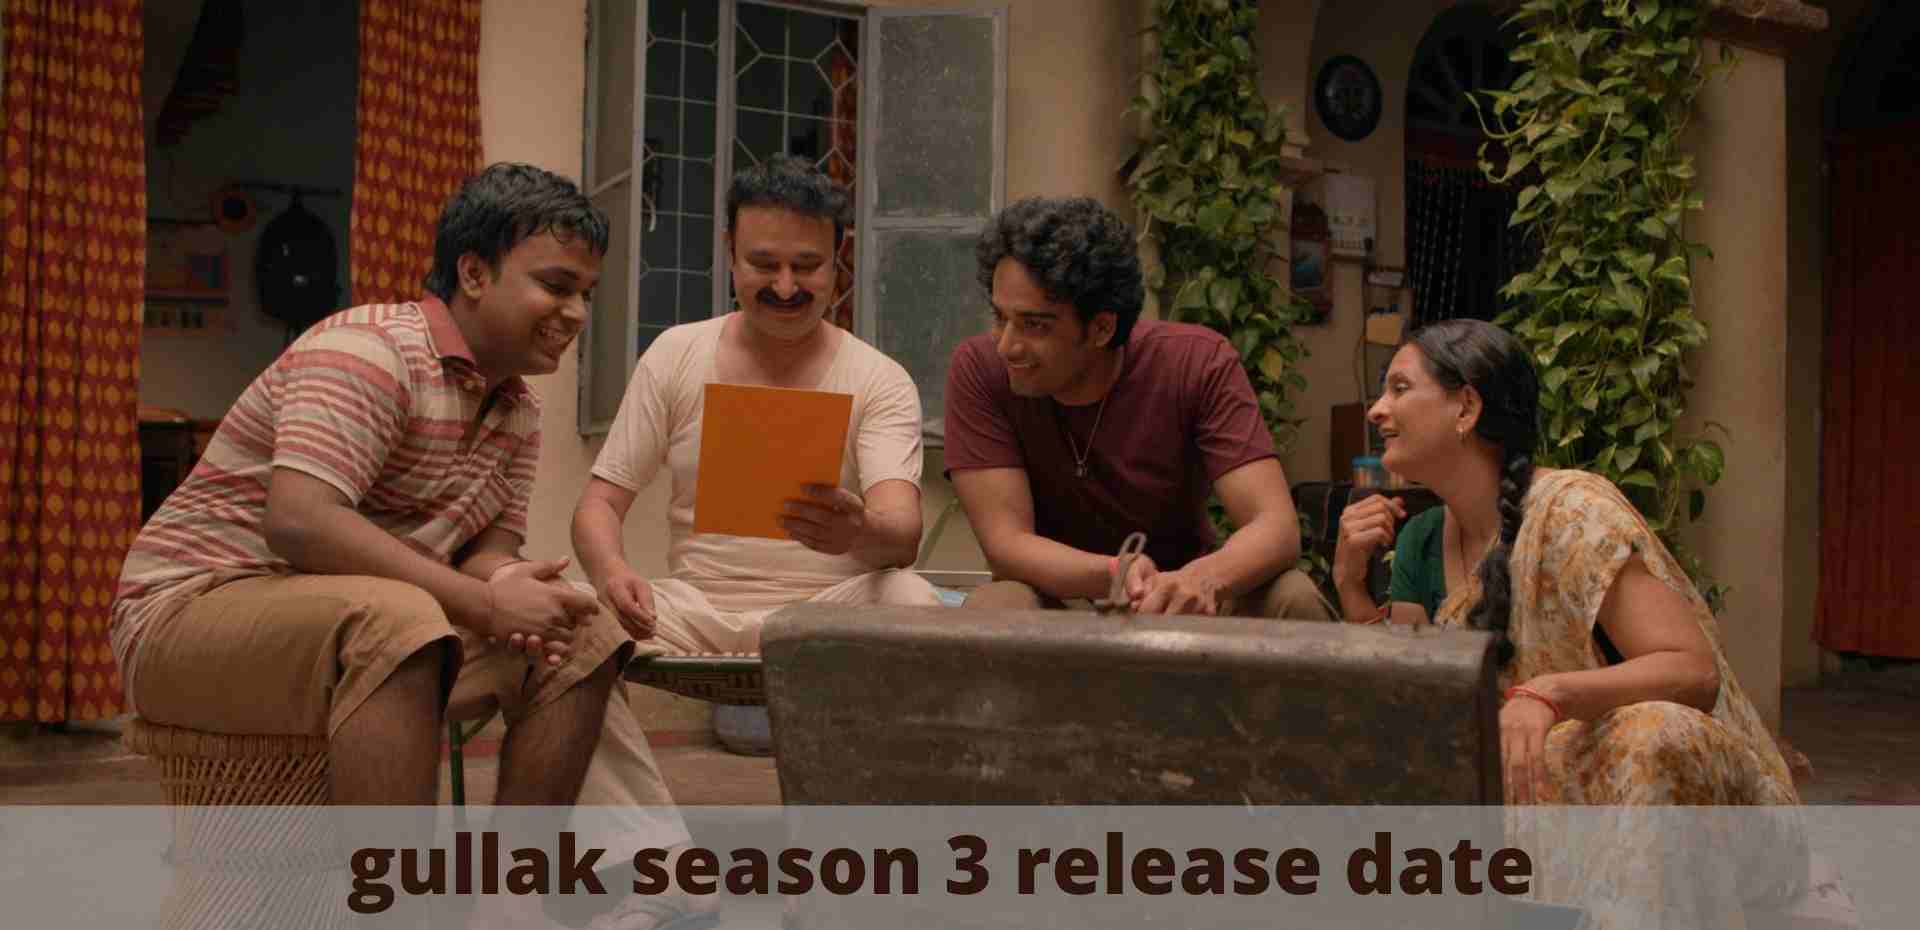 gullak season 3 release date